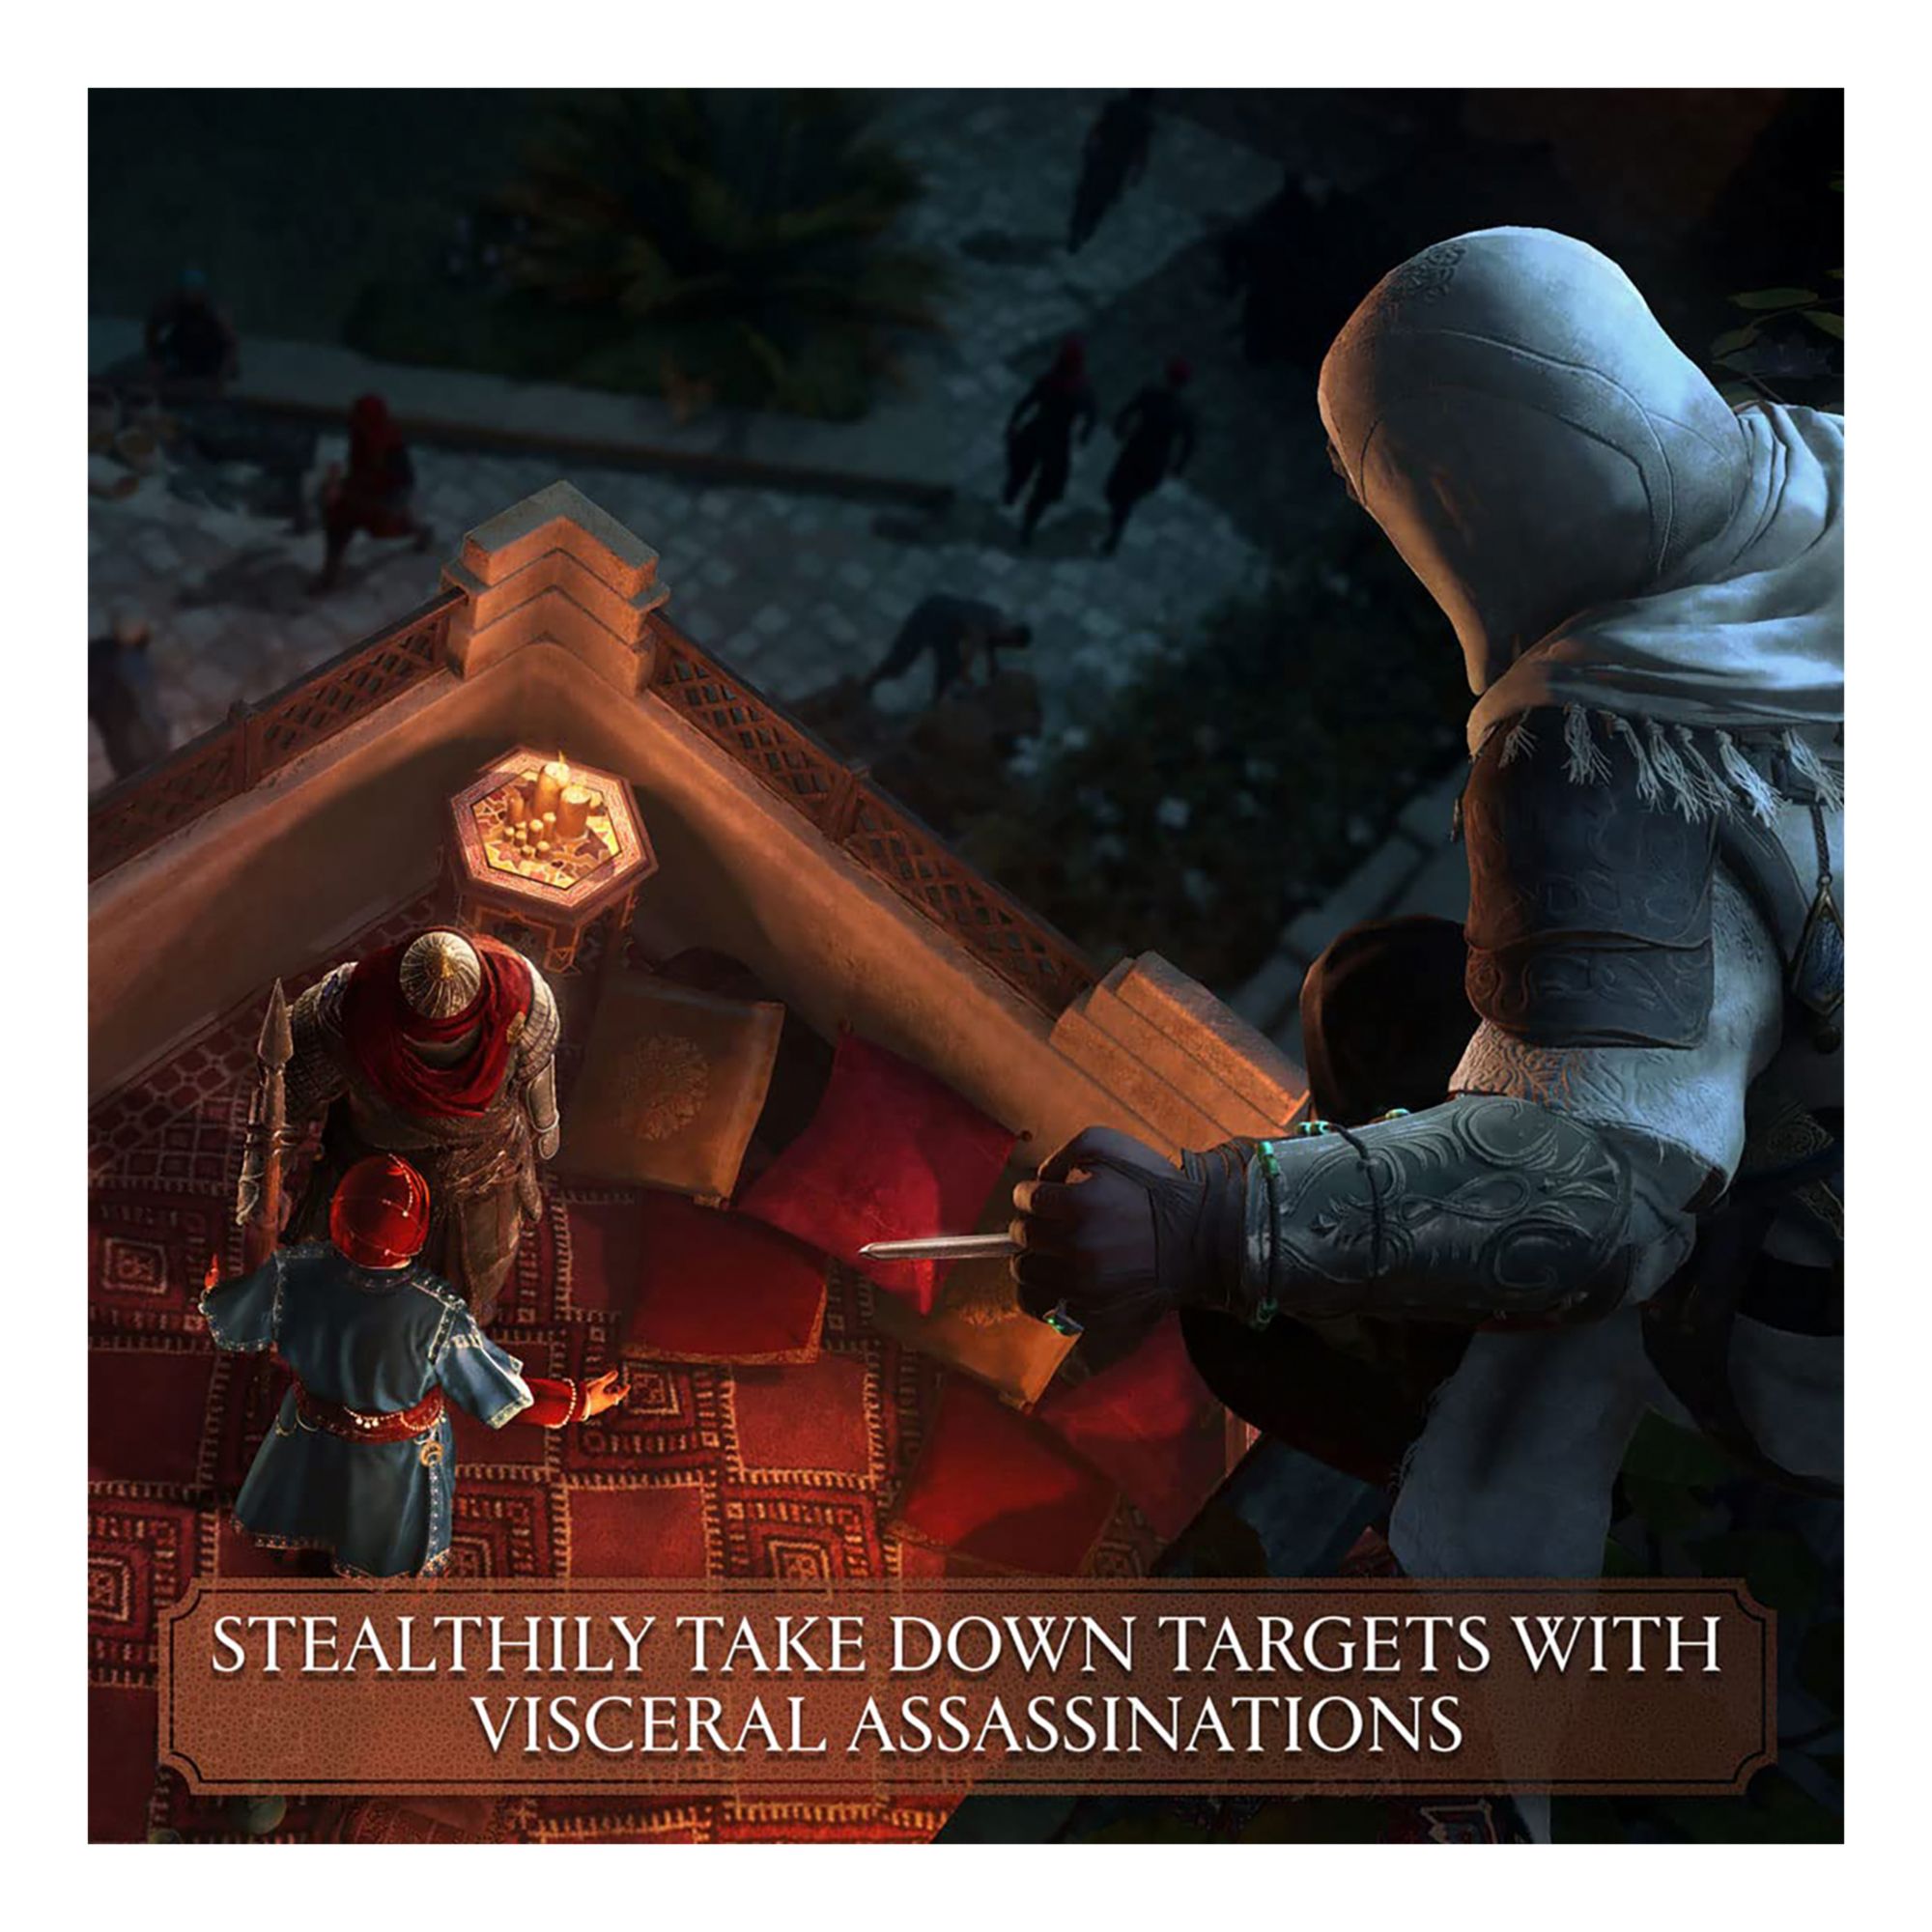 Assassin's Creed Valhalla - Standard Edition